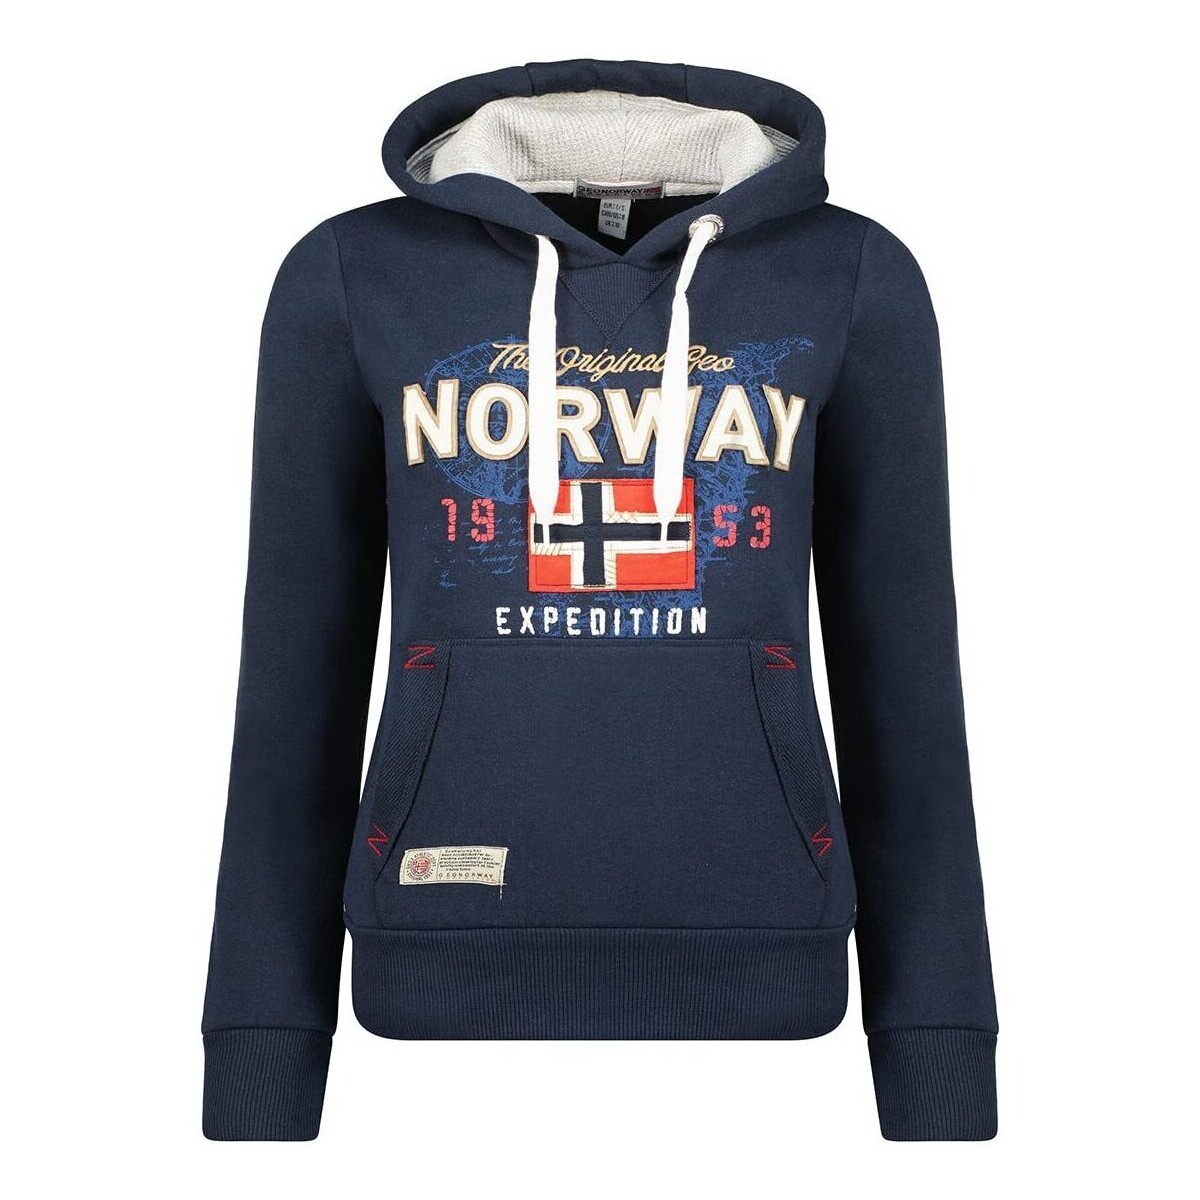 Vêtements Femme Sweats Geographical Norway GUITRE Marine